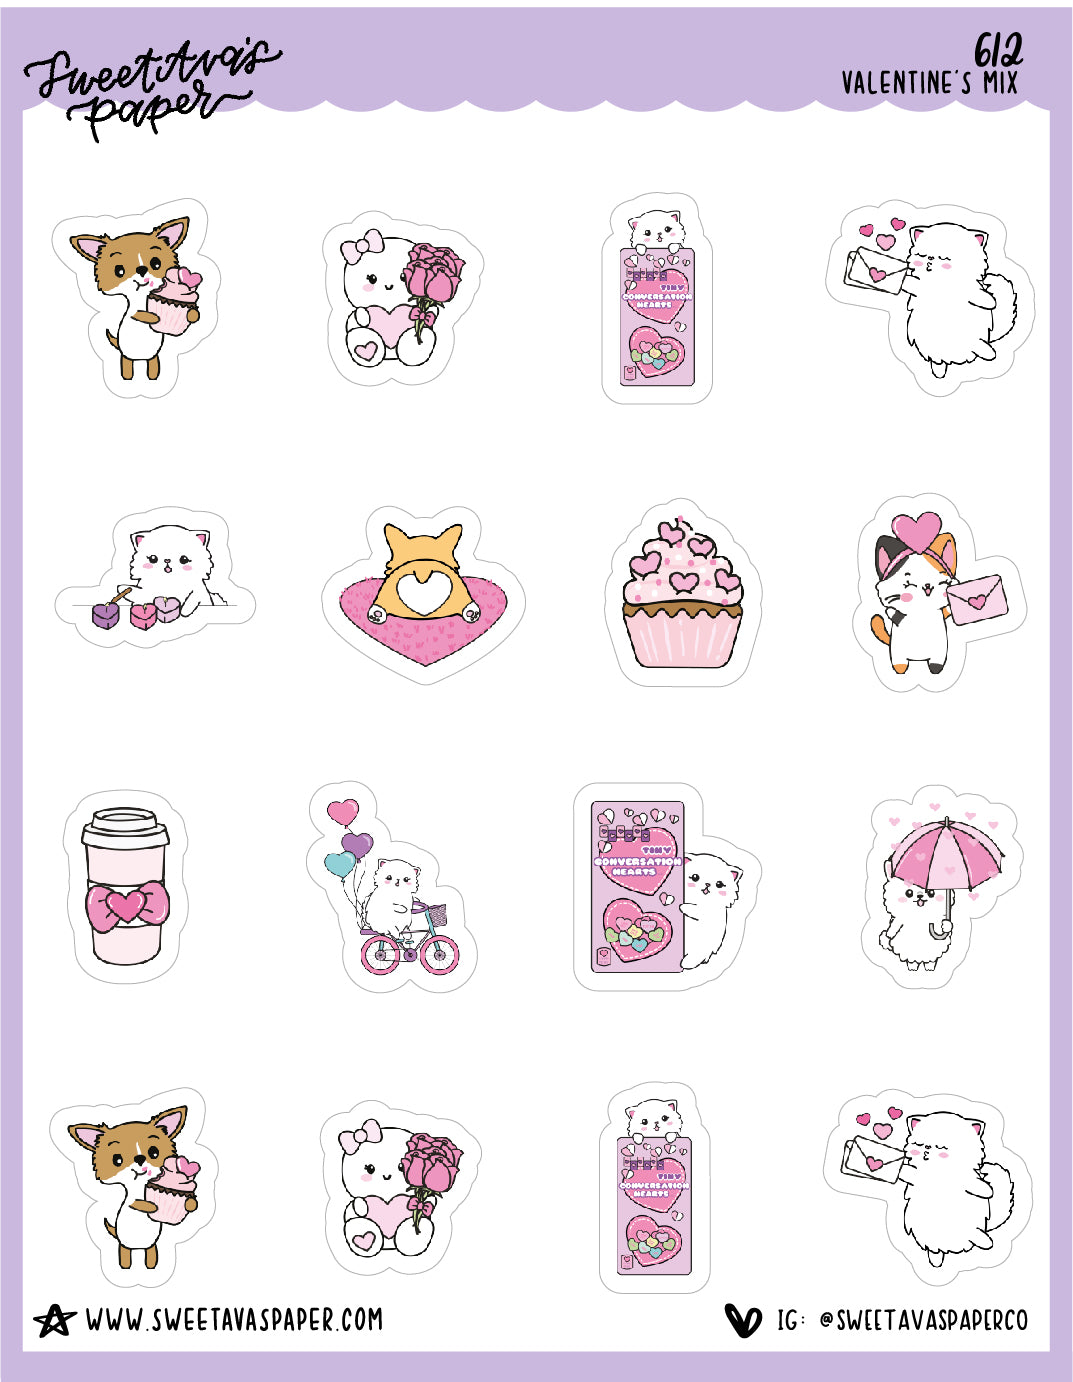 Valentine's Day Mix Planner Stickers - Snowball The Cat, Dottie, Pumpkin, Dundee, Chip - [612]